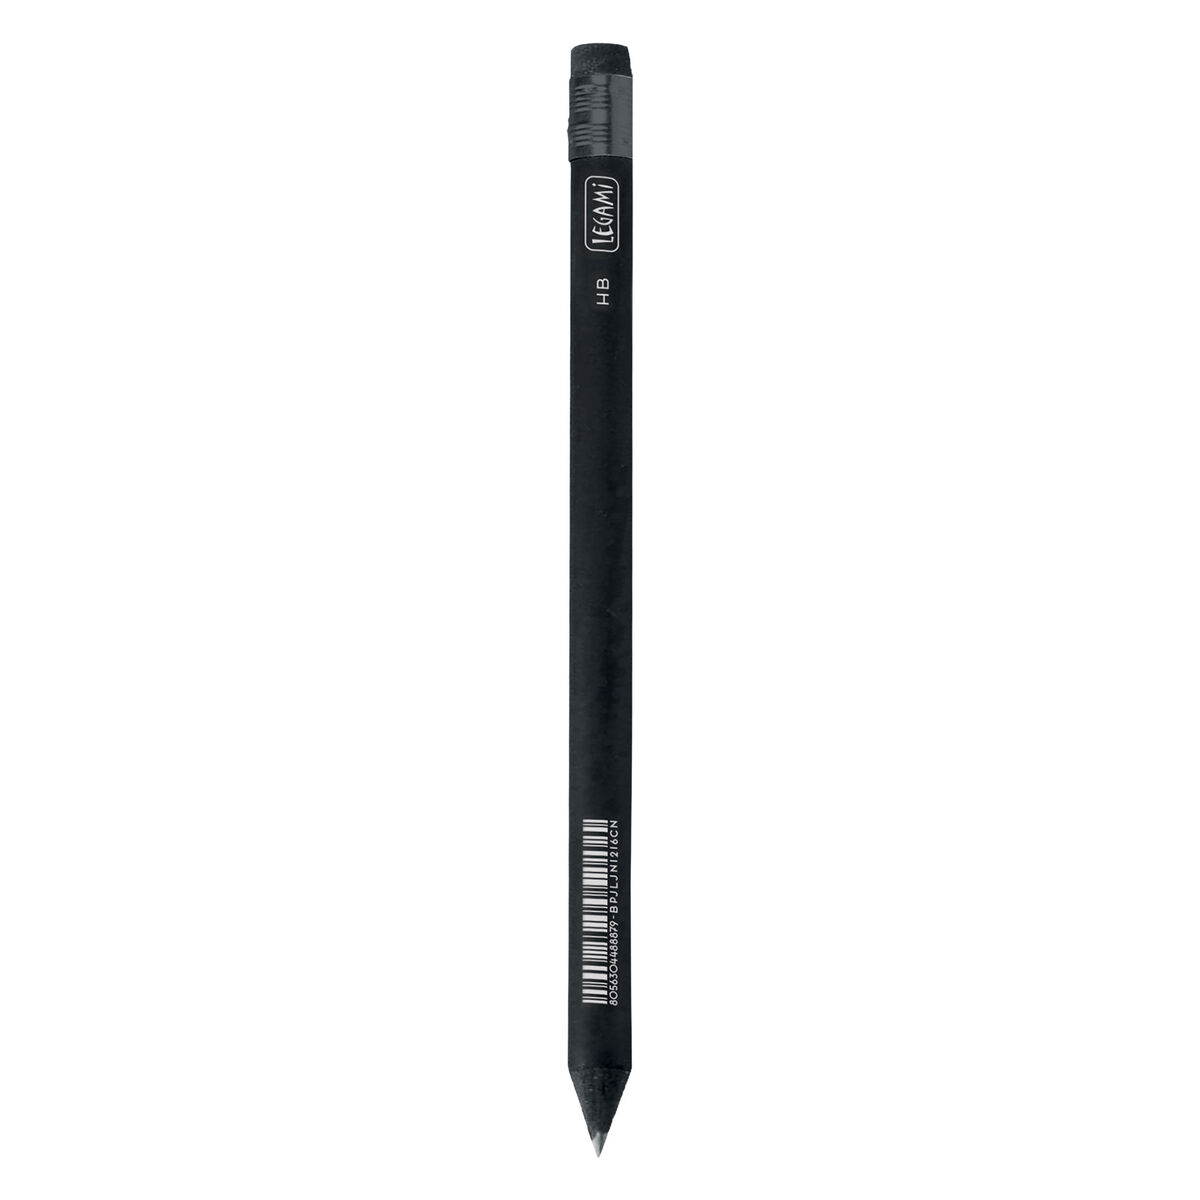 Crayon avec Gomme - Black Pencil, , zoo